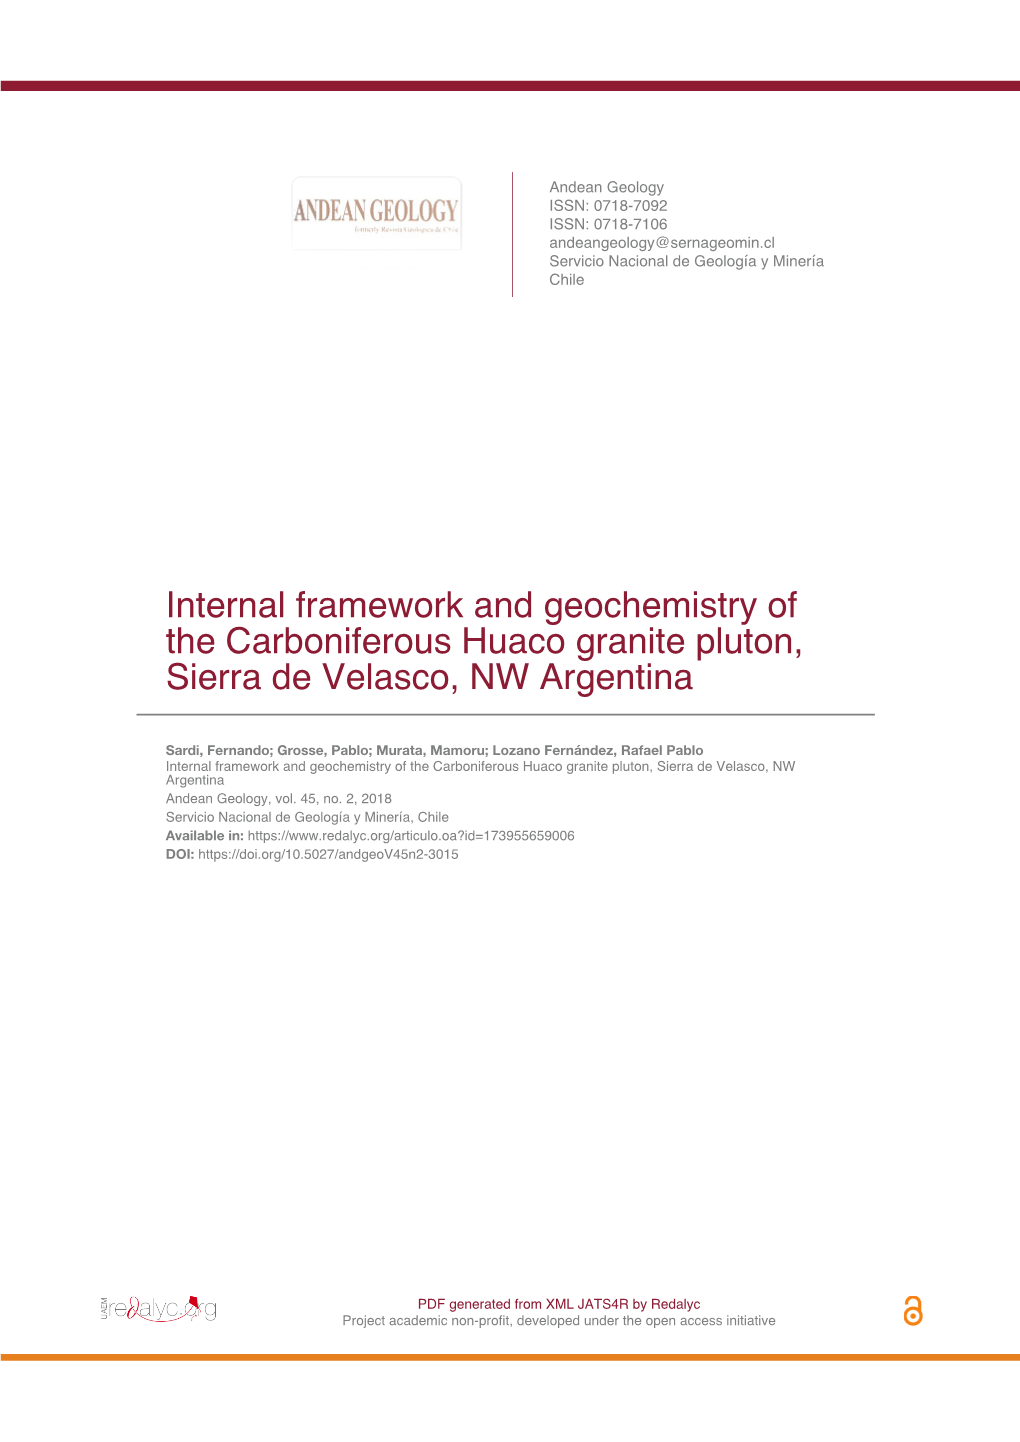 Internal Framework and Geochemistry of the Carboniferous Huaco Granite Pluton, Sierra De Velasco, NW Argentina